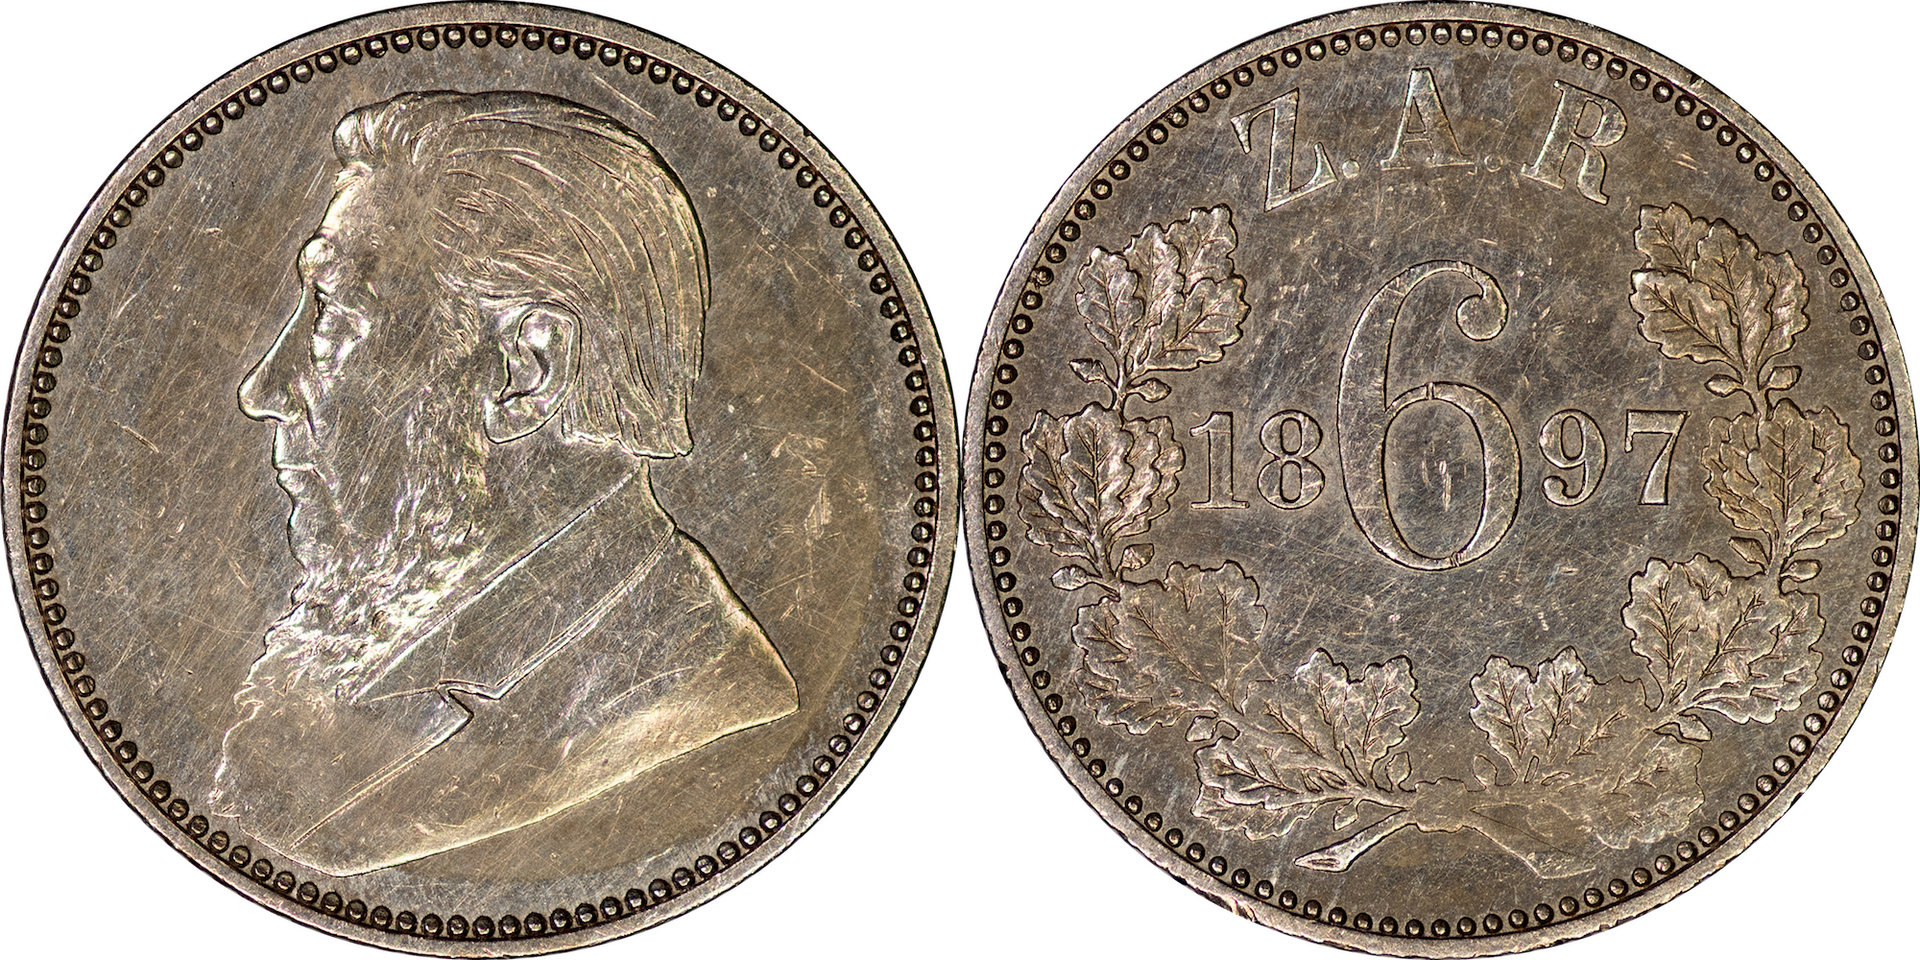 South Africa - 1897 6 Pence.jpg